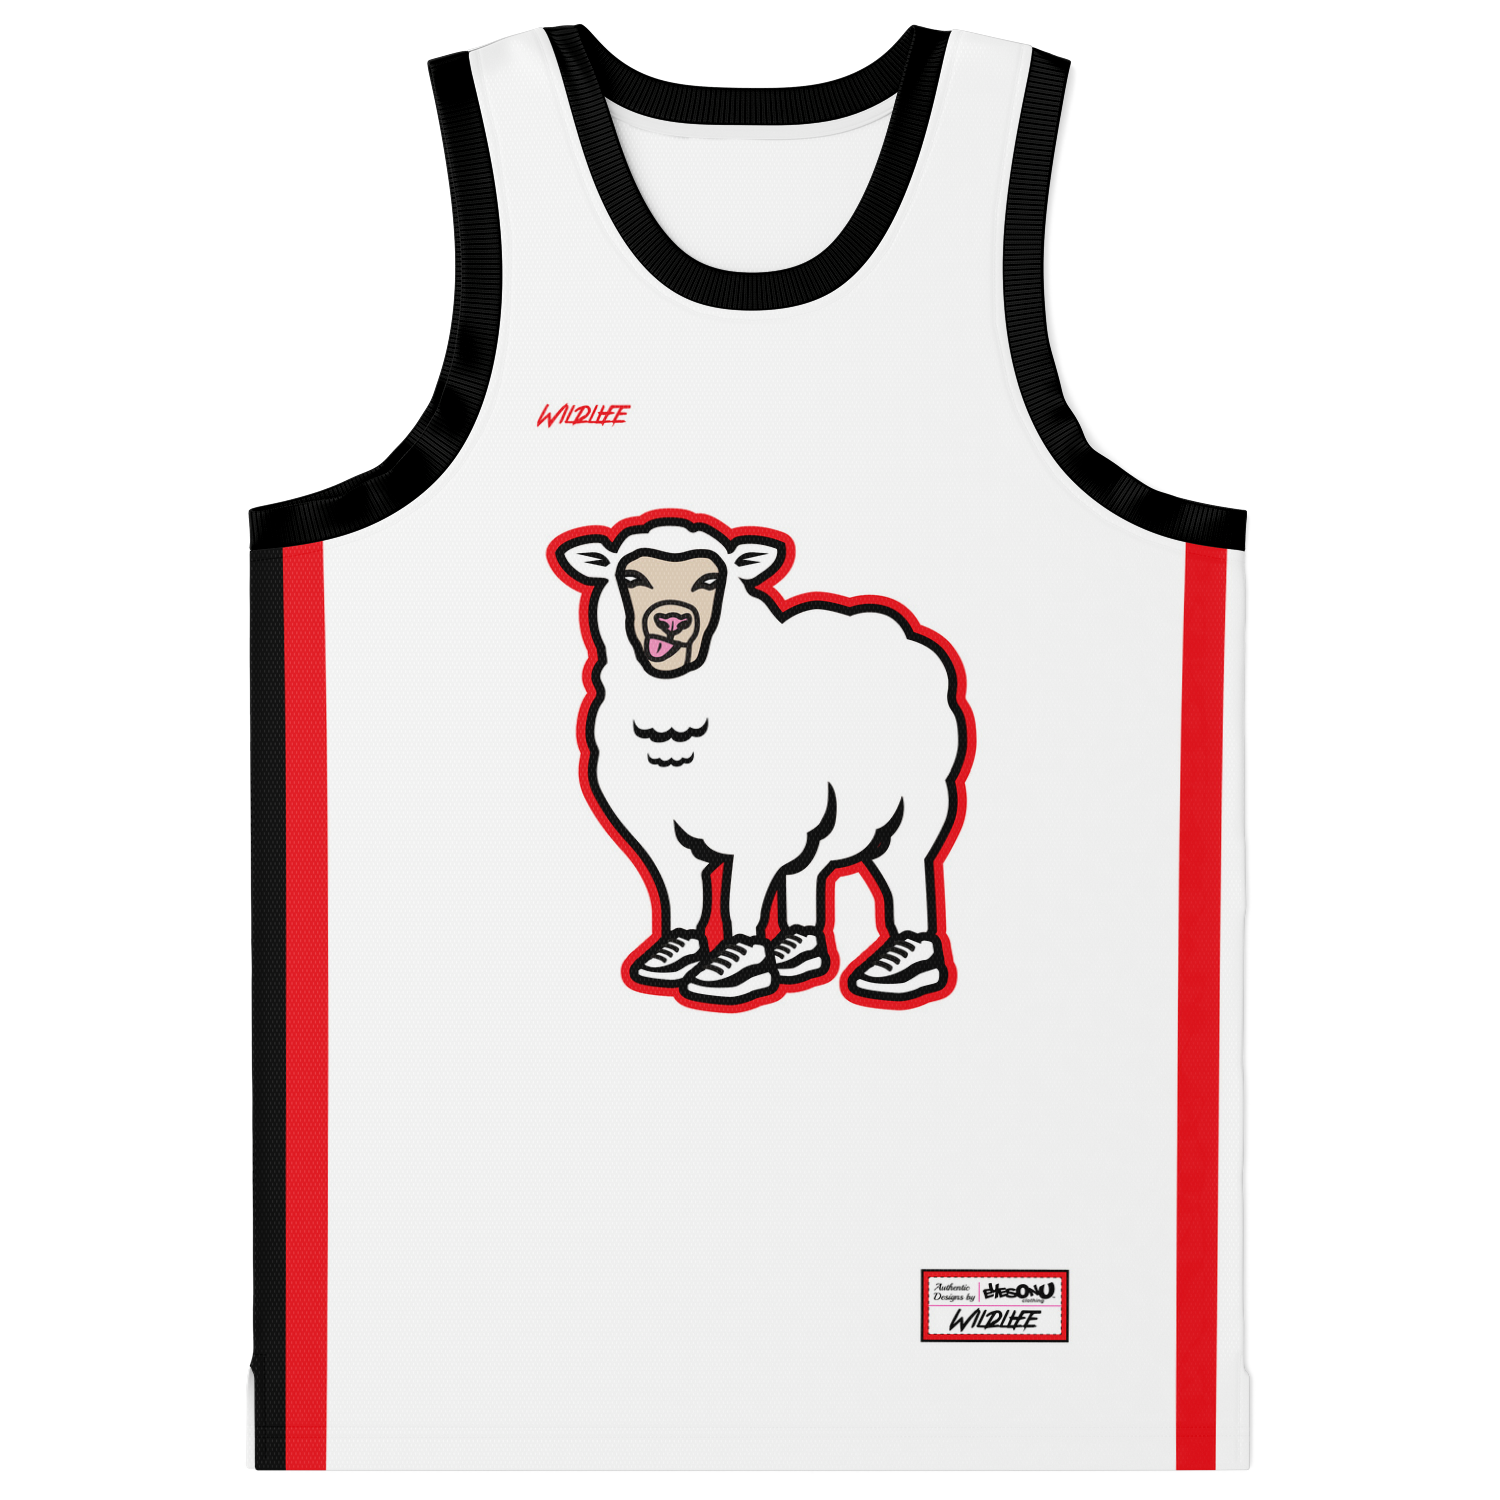 i_Glow_ Team Sheep Red BW Jersey